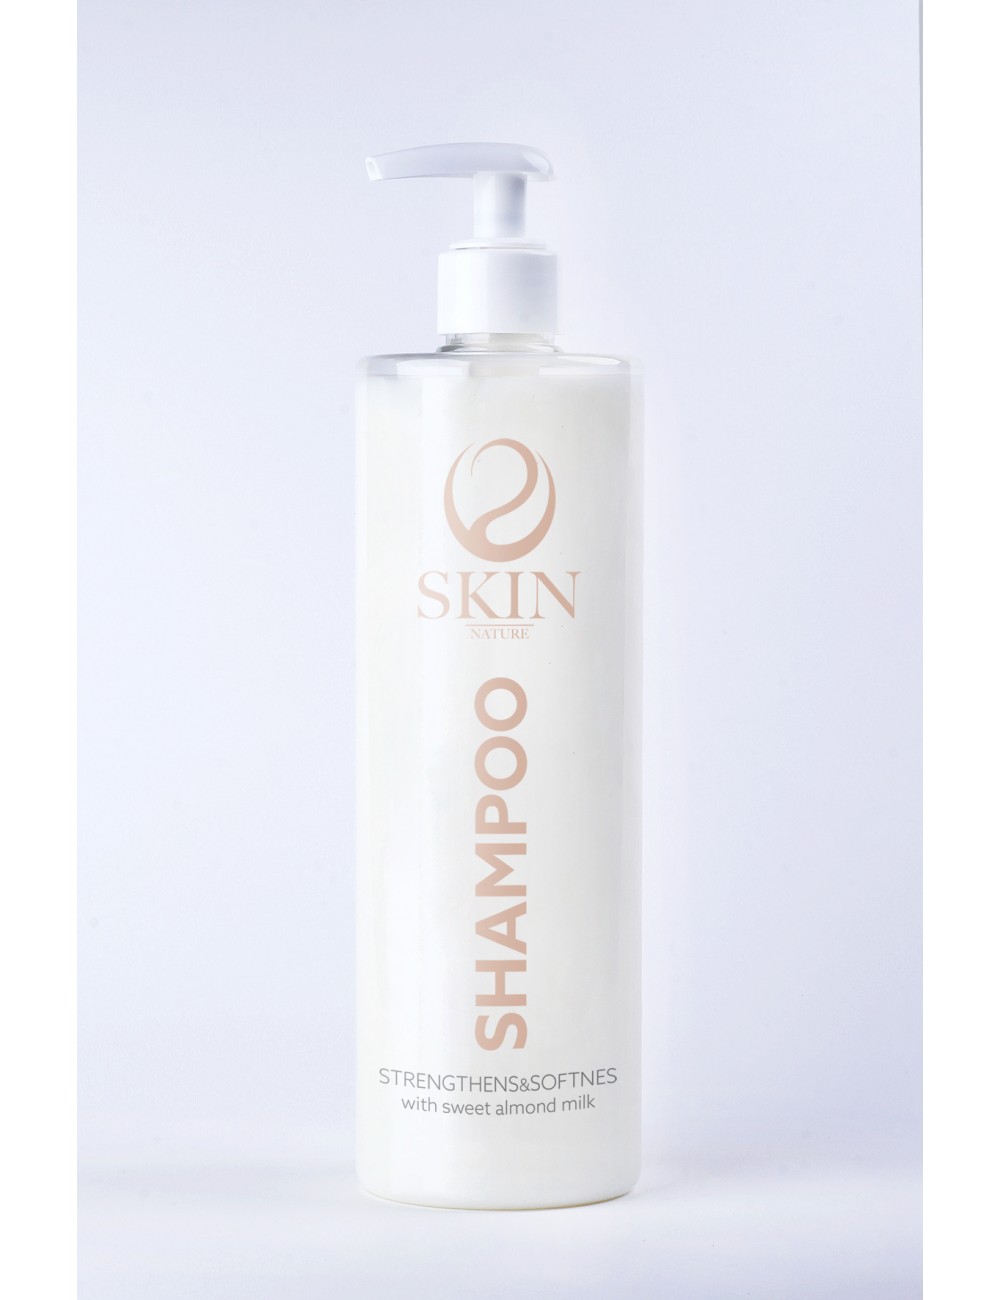 SKIN O2 Shampooing vitalité & douceur 500 ml